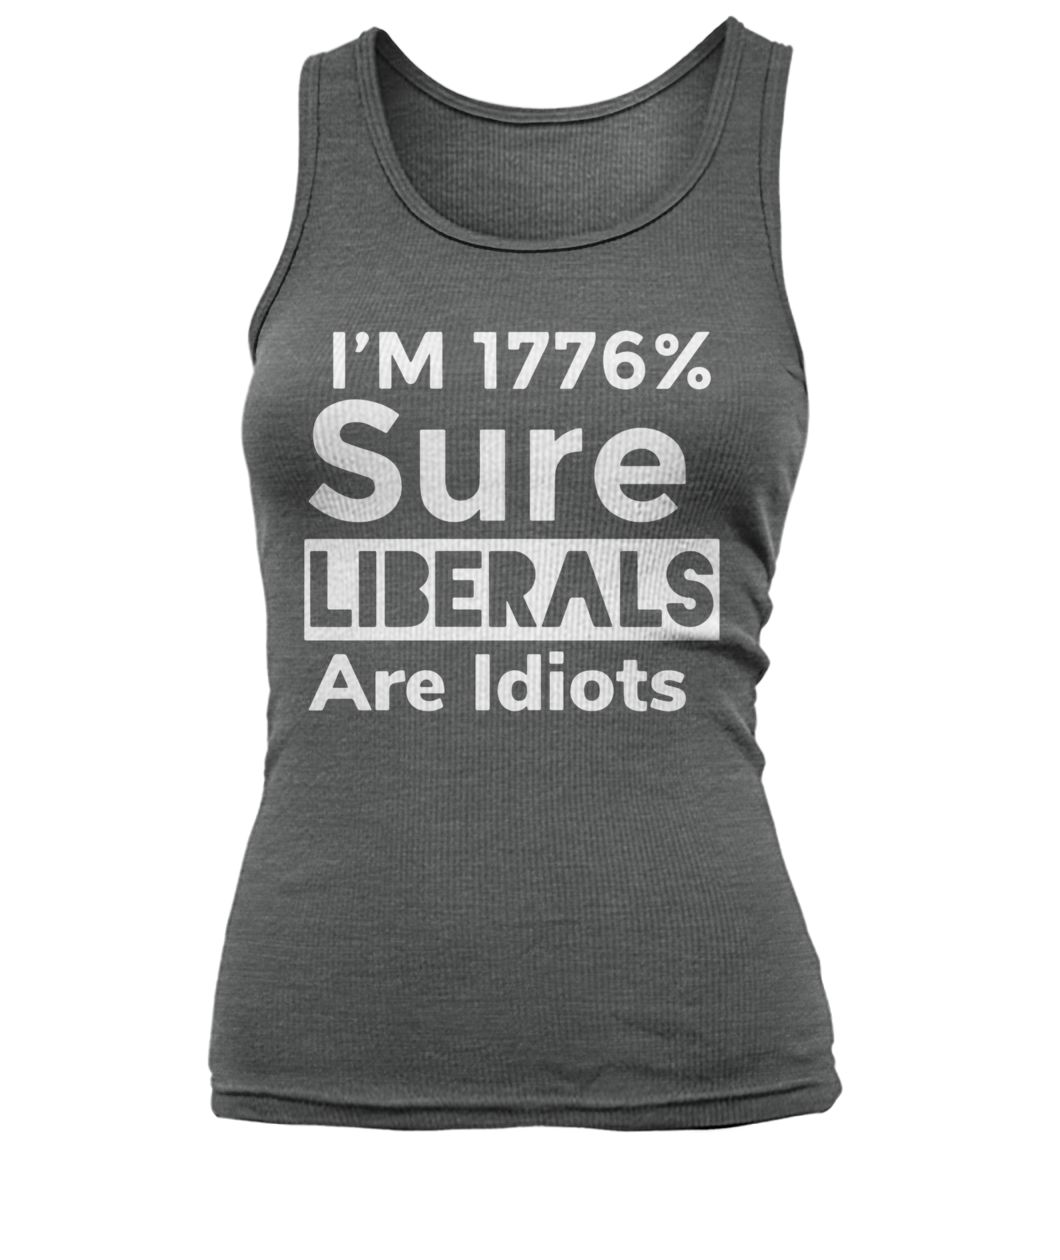 Official I'm 1776% sure liberals are idiots women's tank top